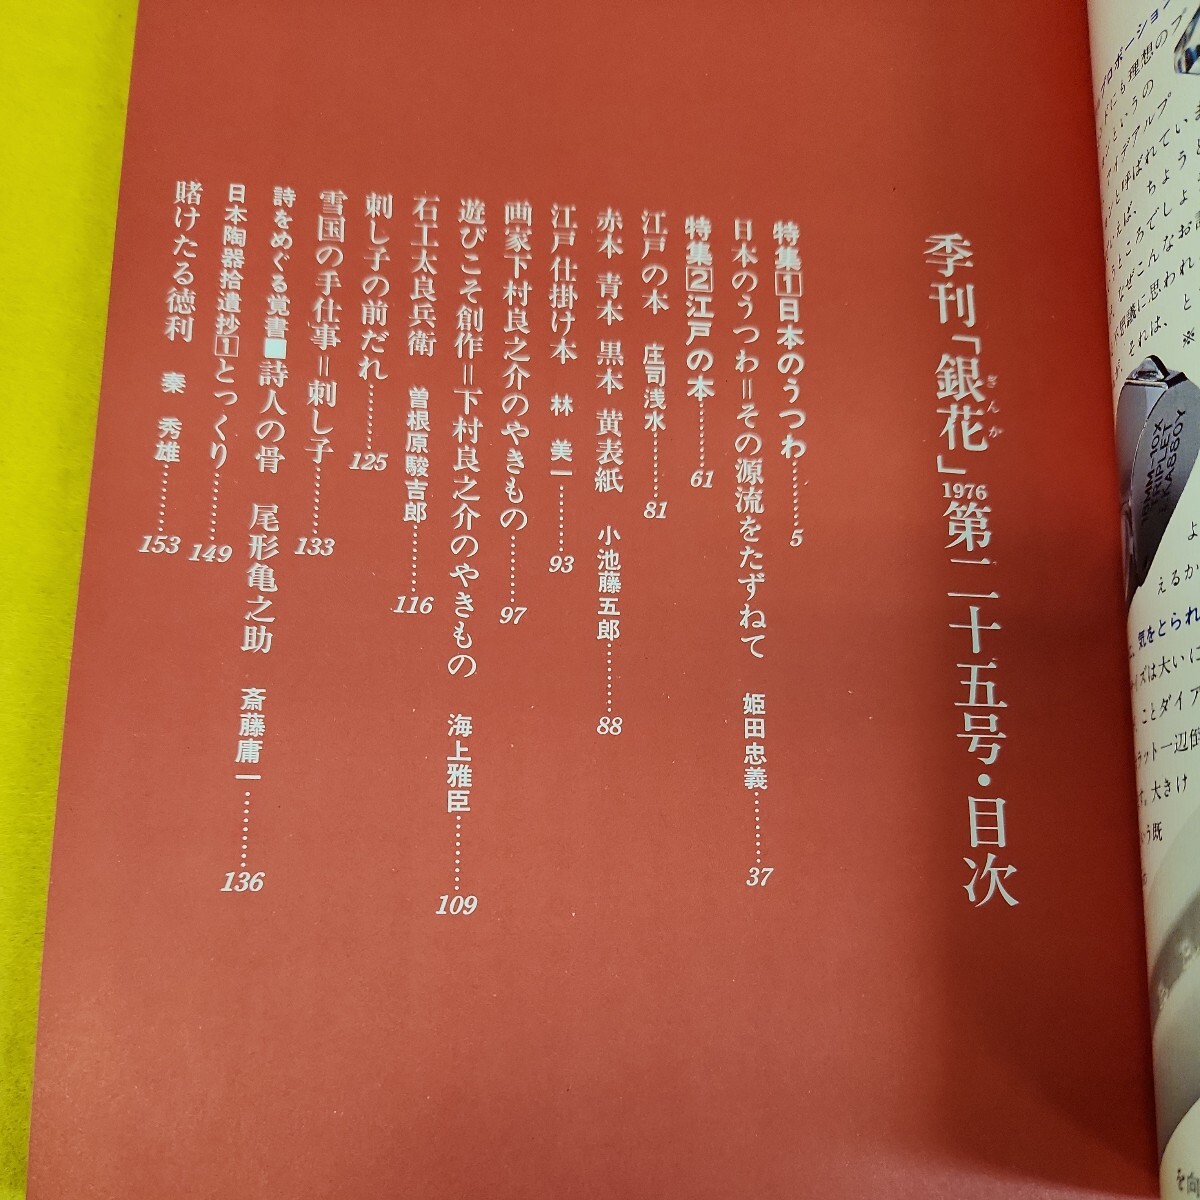 C52-027 季刊「銀花」1976年第25号春 日本のうつわ他 文化出版局 表紙に汚れあり。_画像4